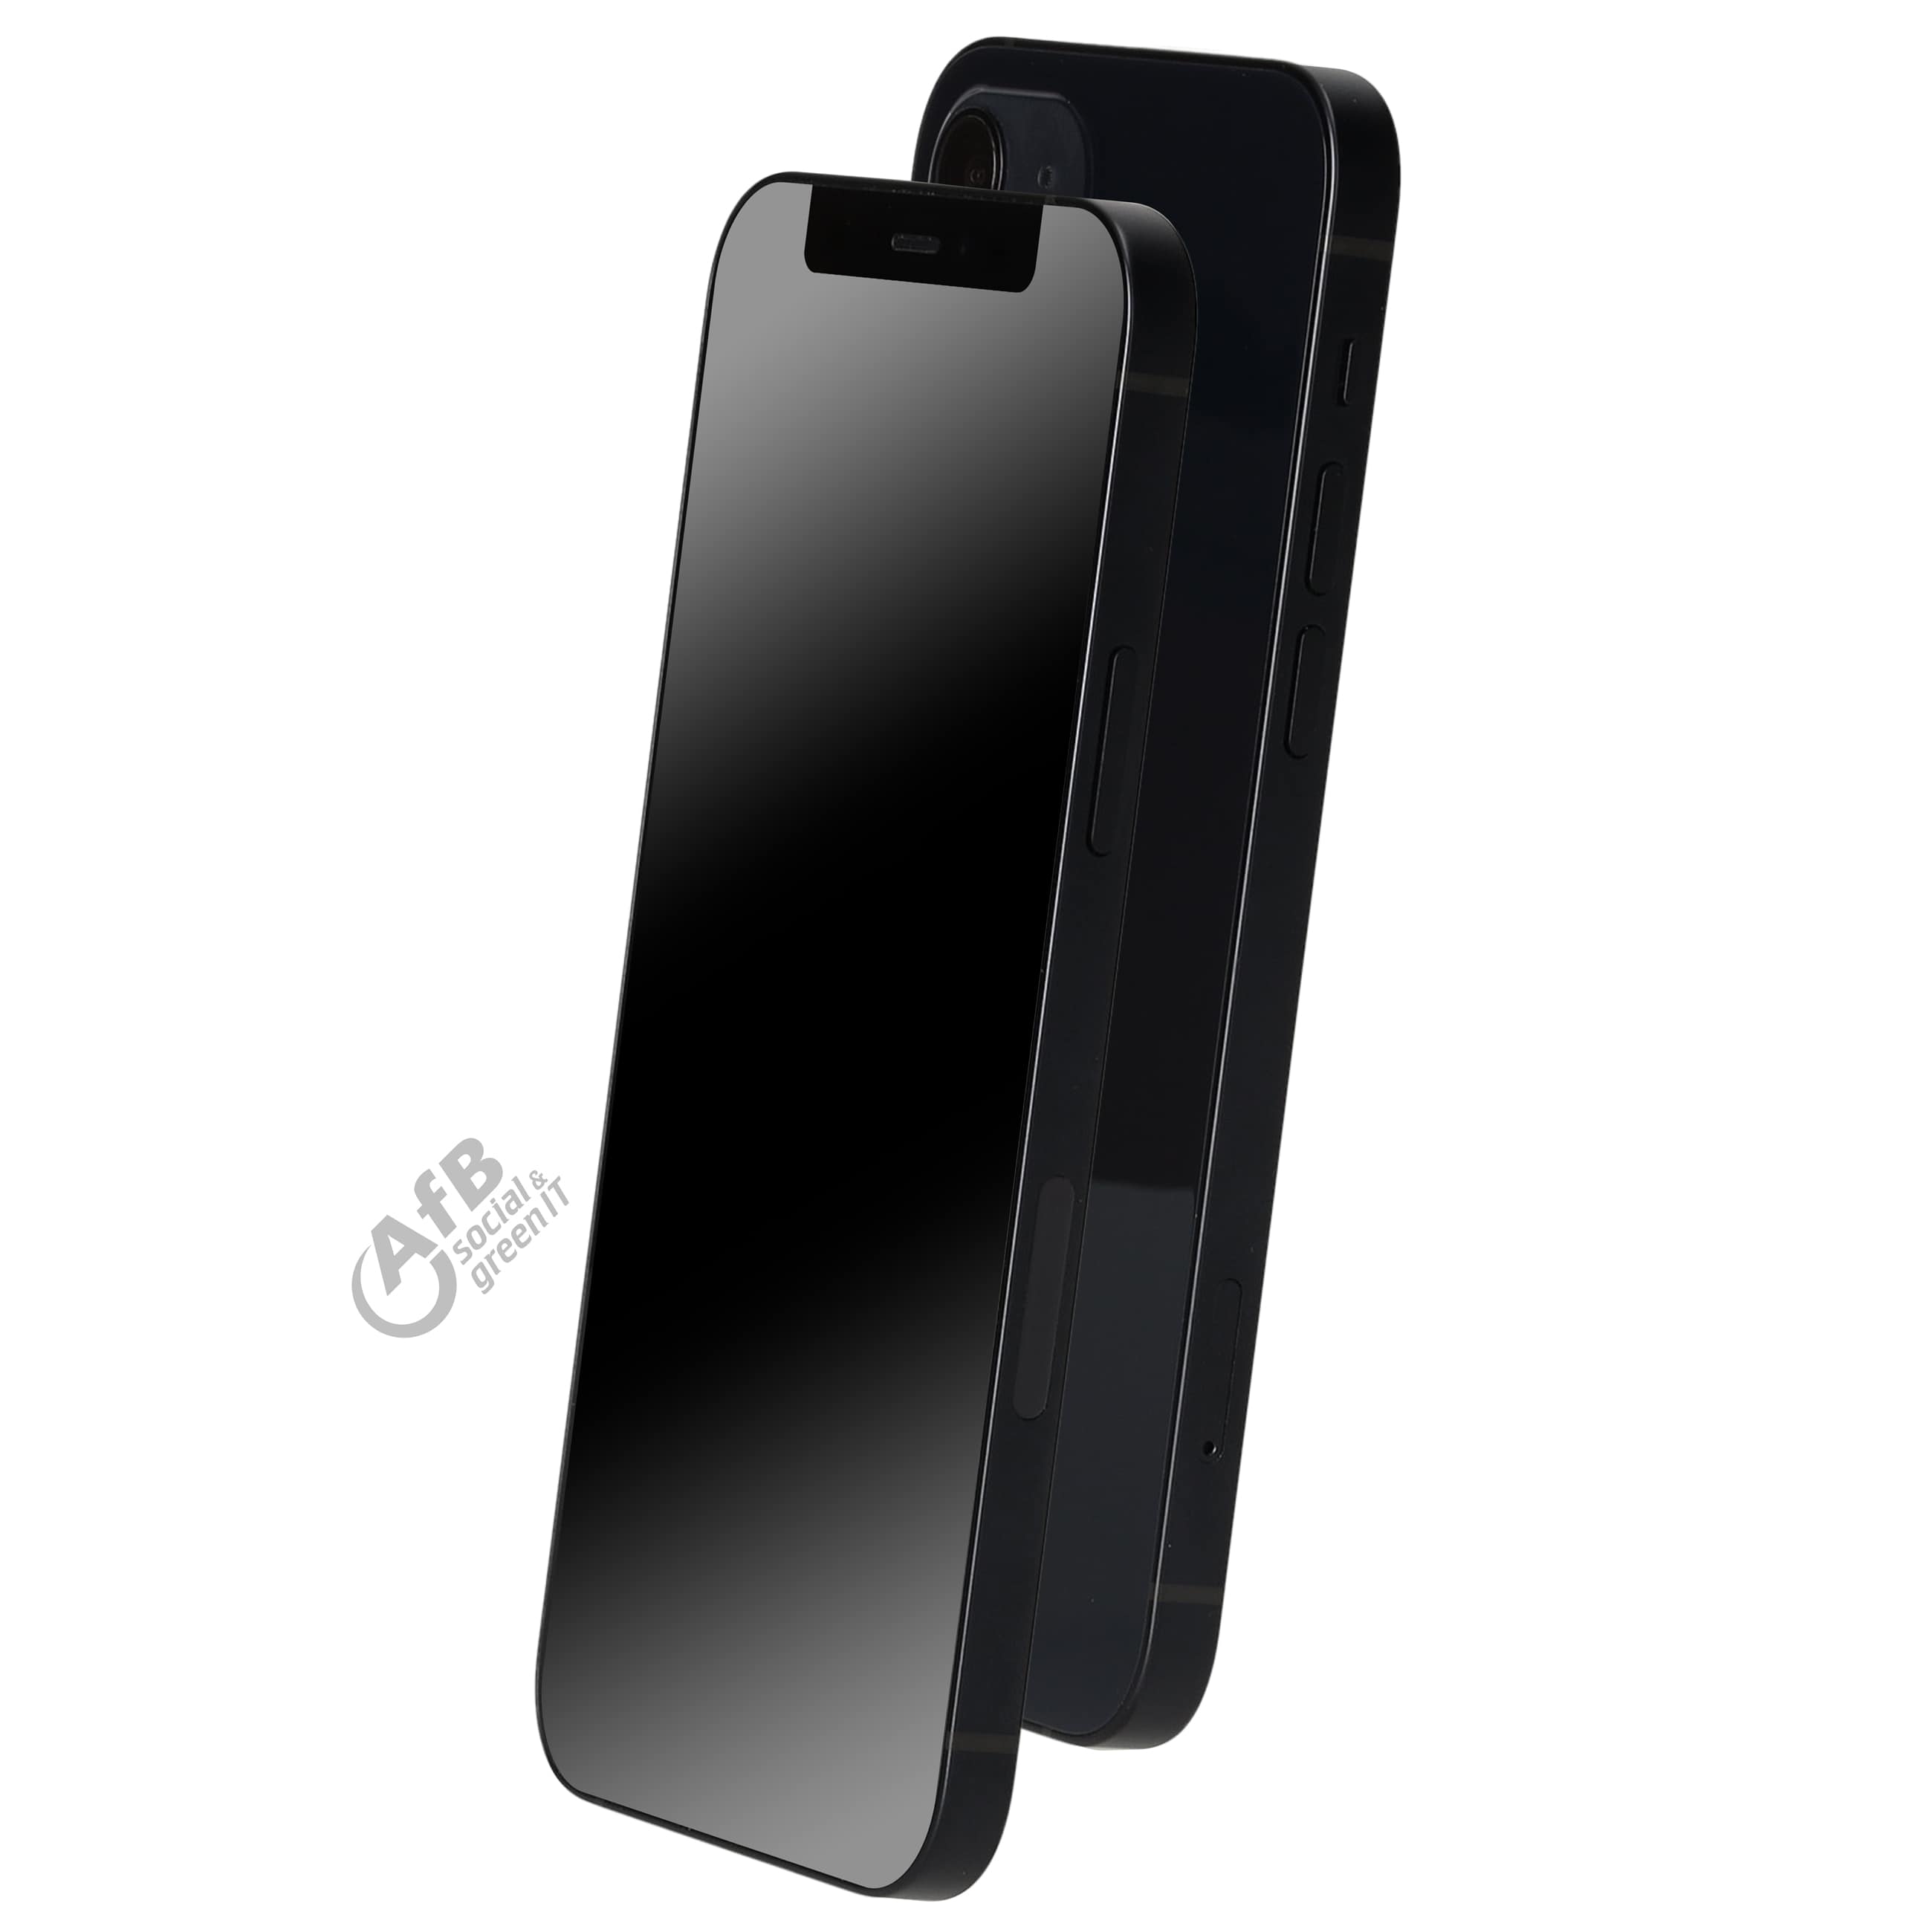 Apple iPhone 12 - 64 GB - Black